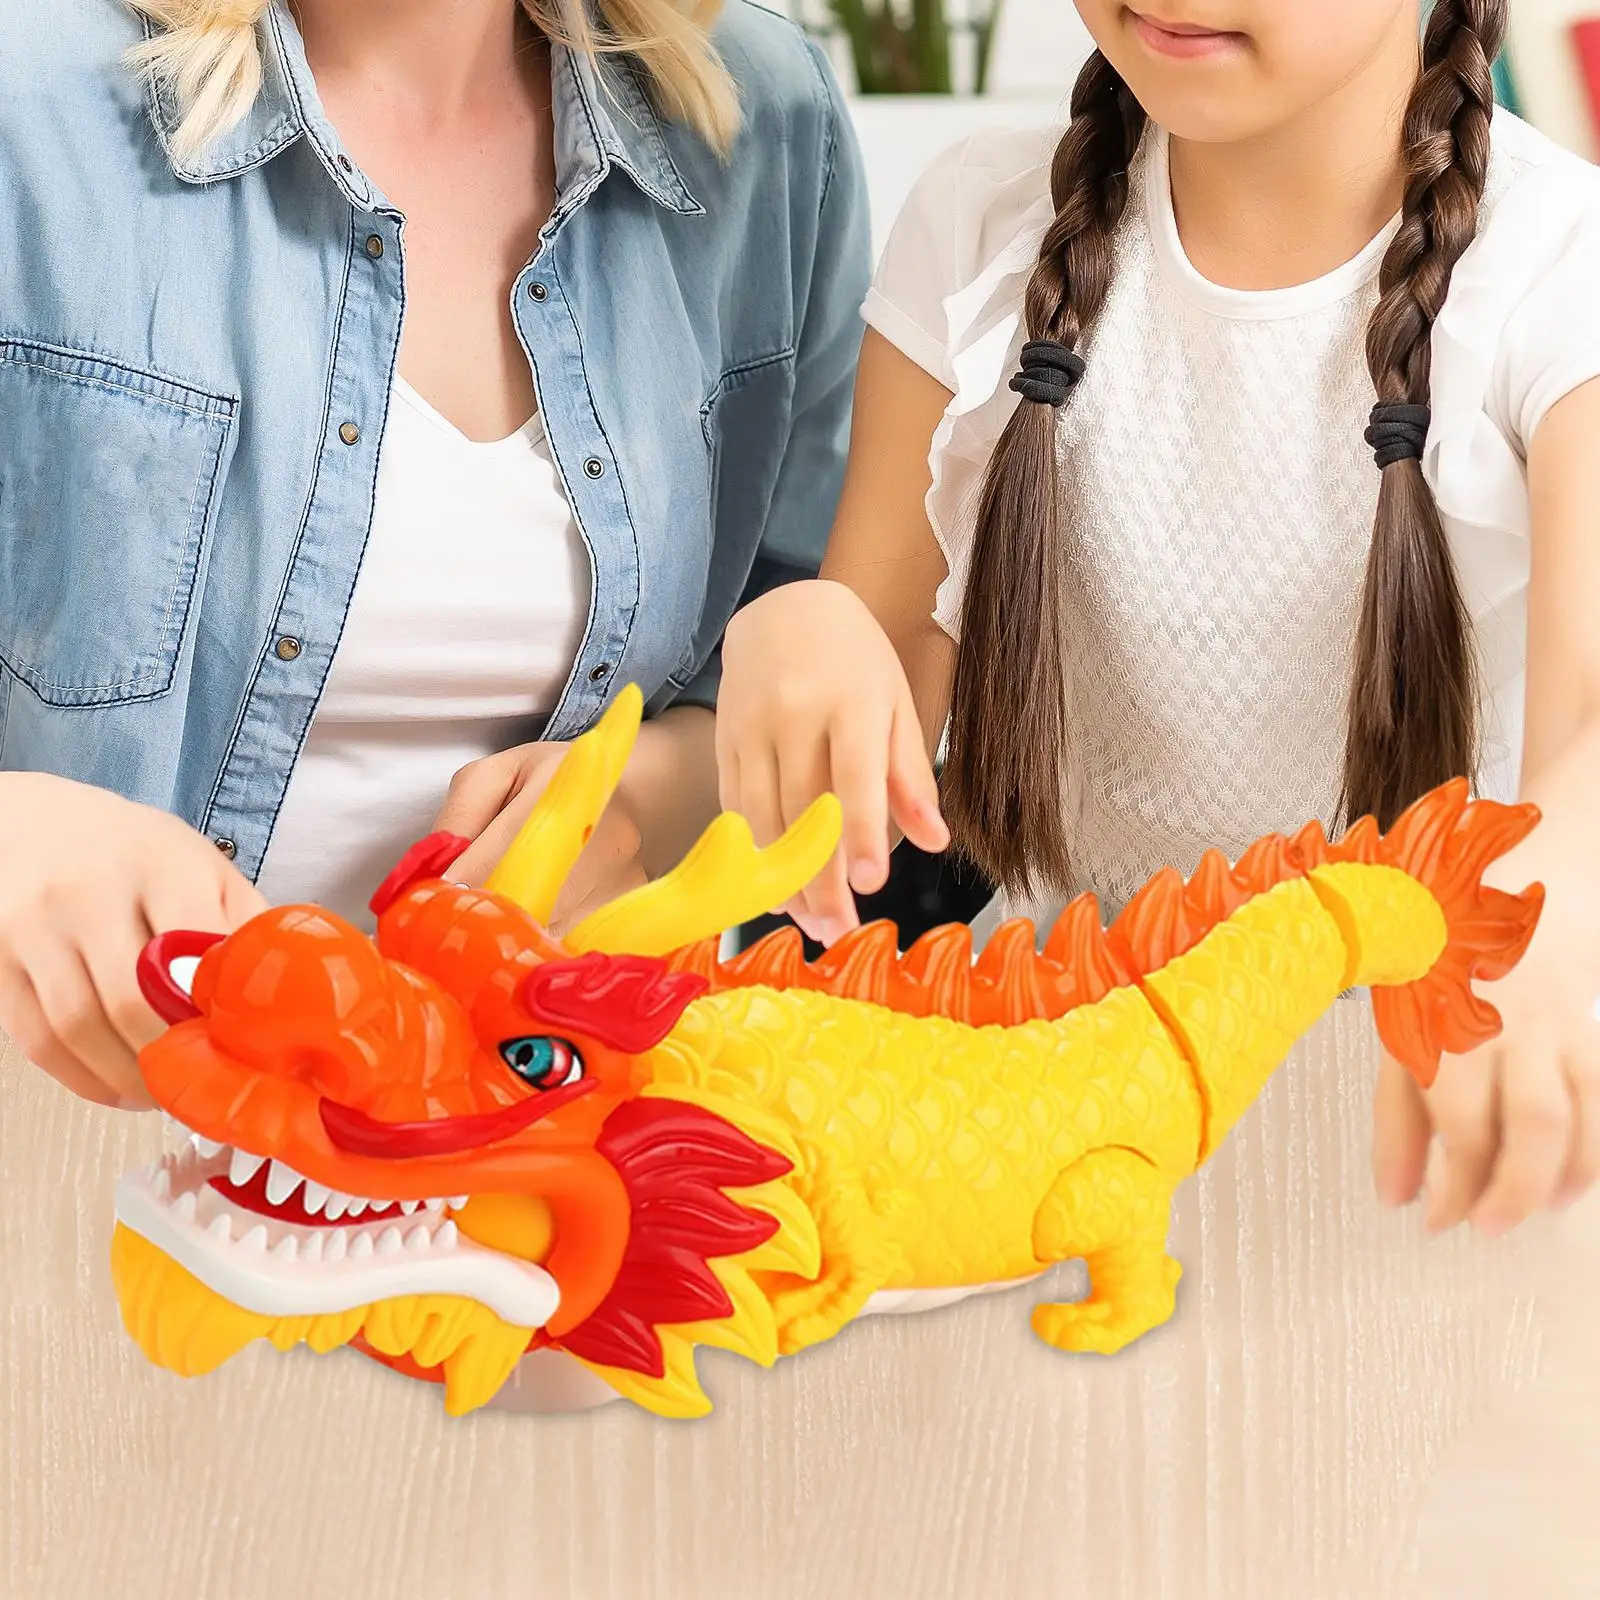 Eletric Dragon Toy Educational Learning Crawling Toy for Boy Adults Girls